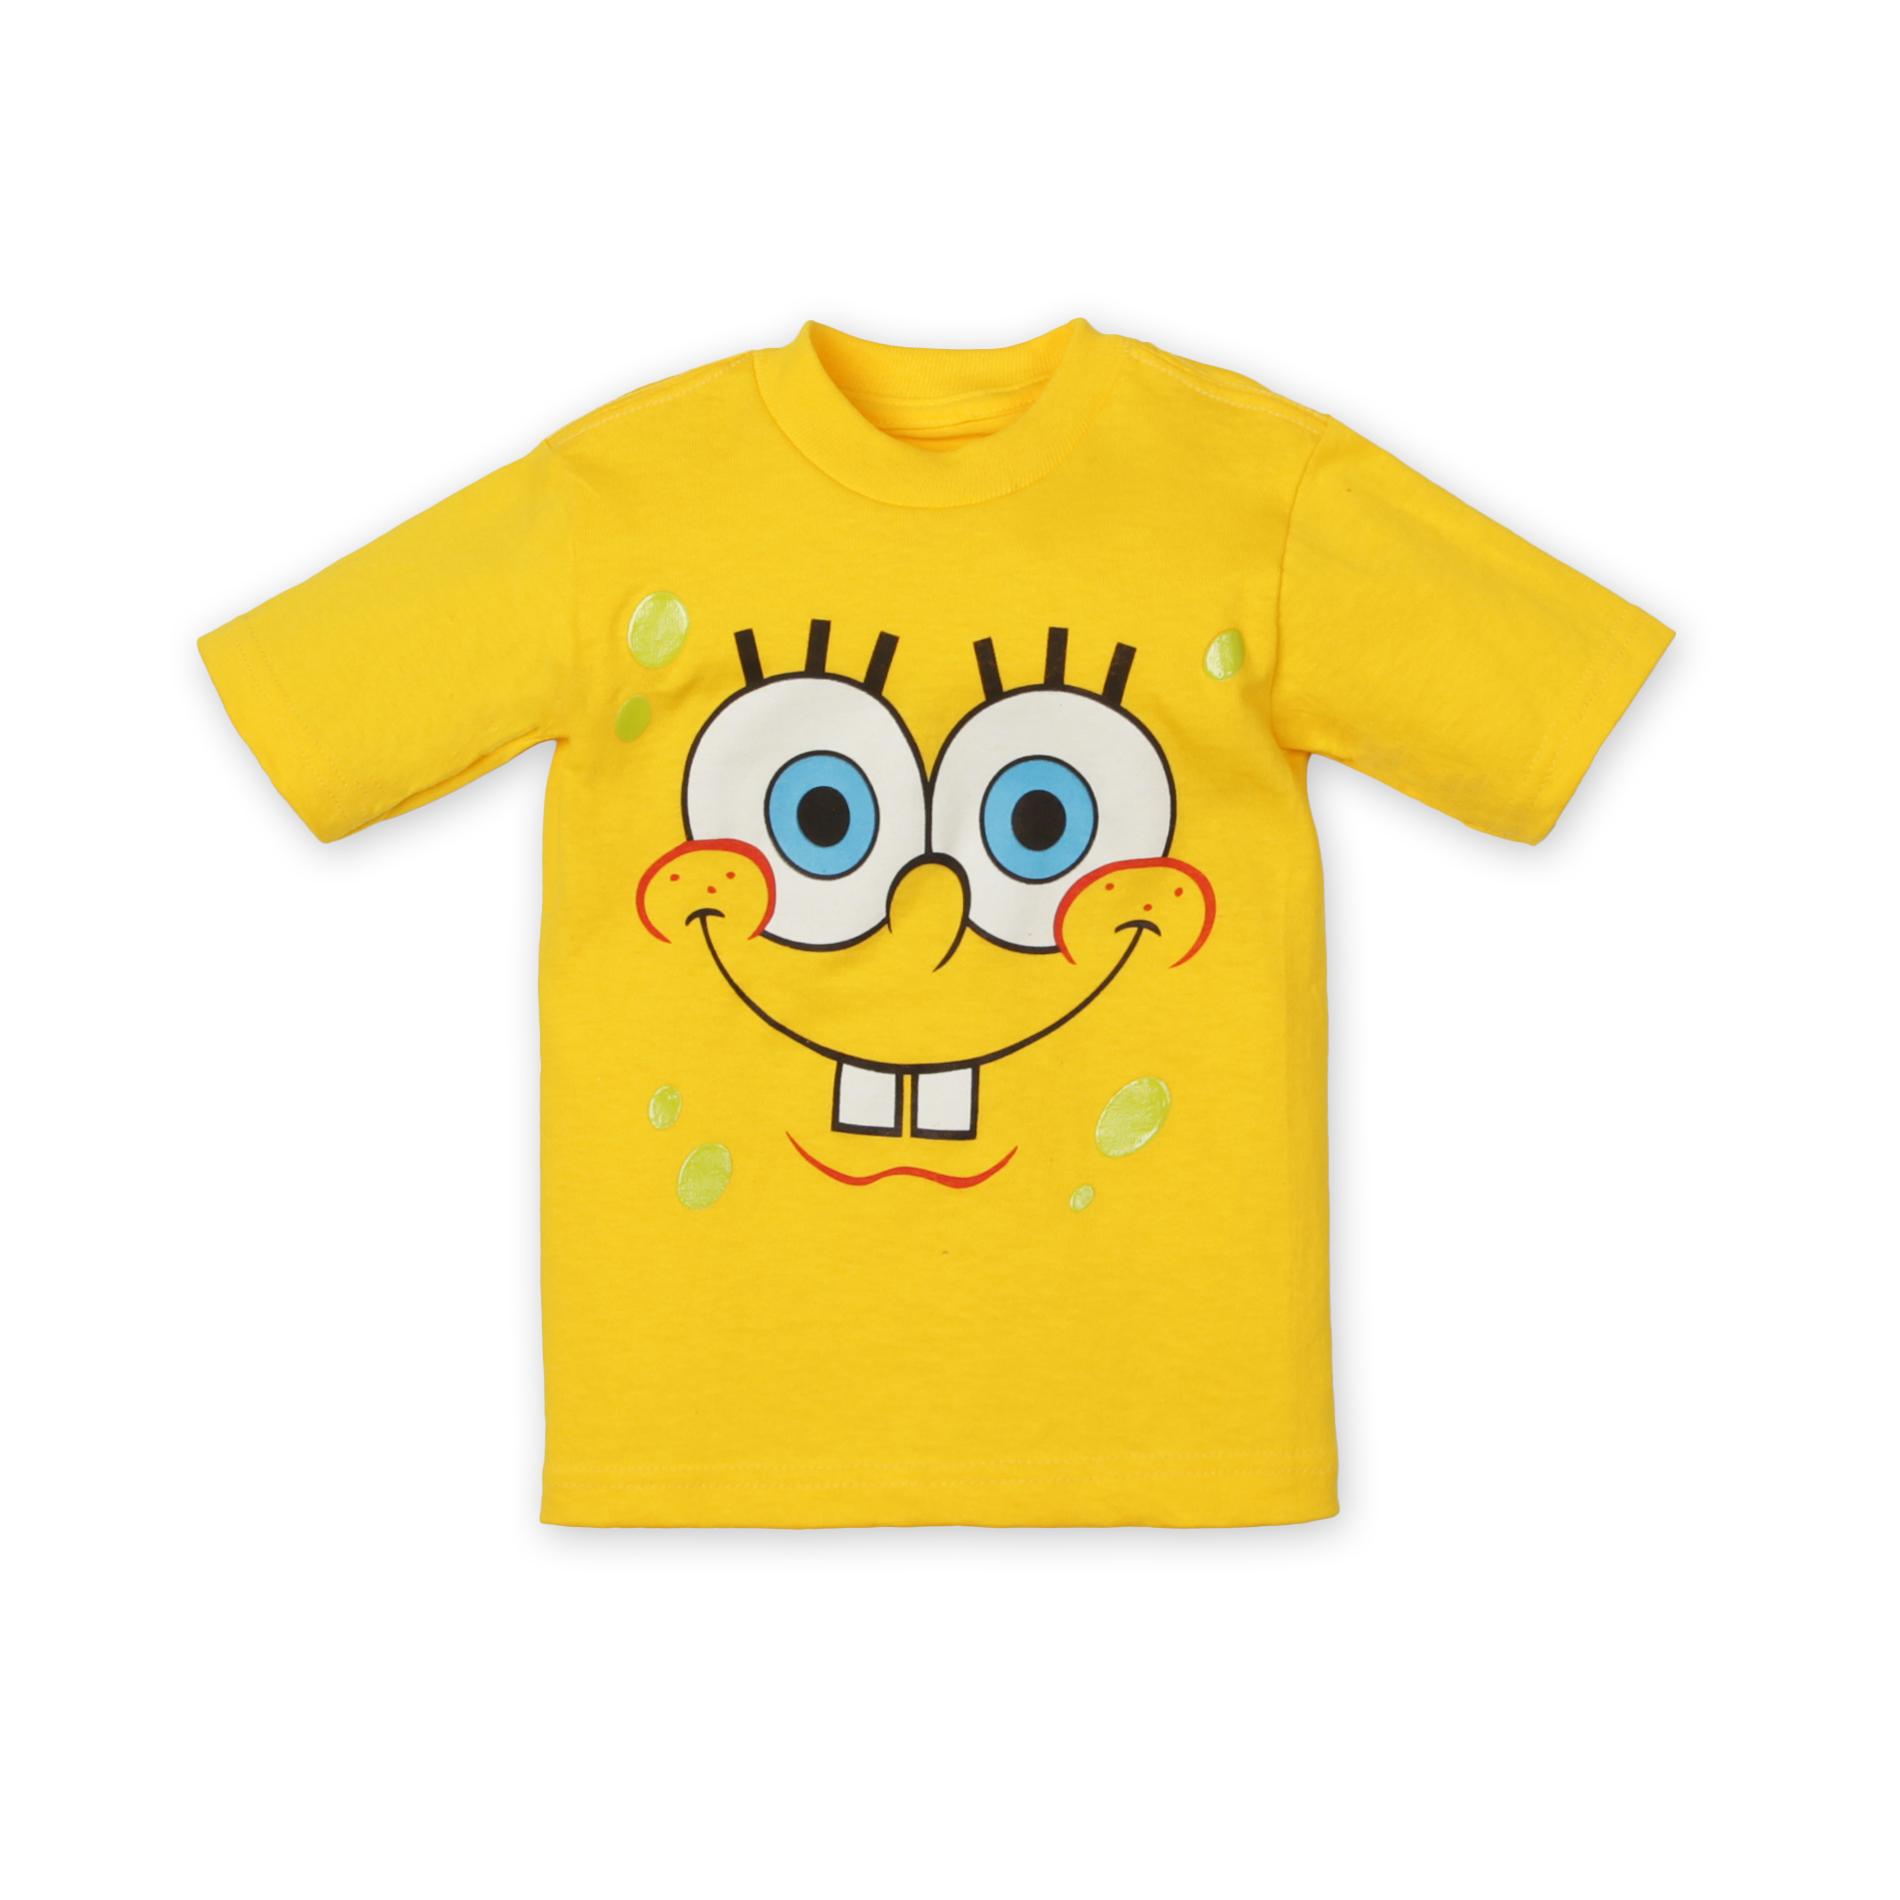 Nickelodeon SpongeBob SquarePants Toddler Boy's Graphic T-Shirt